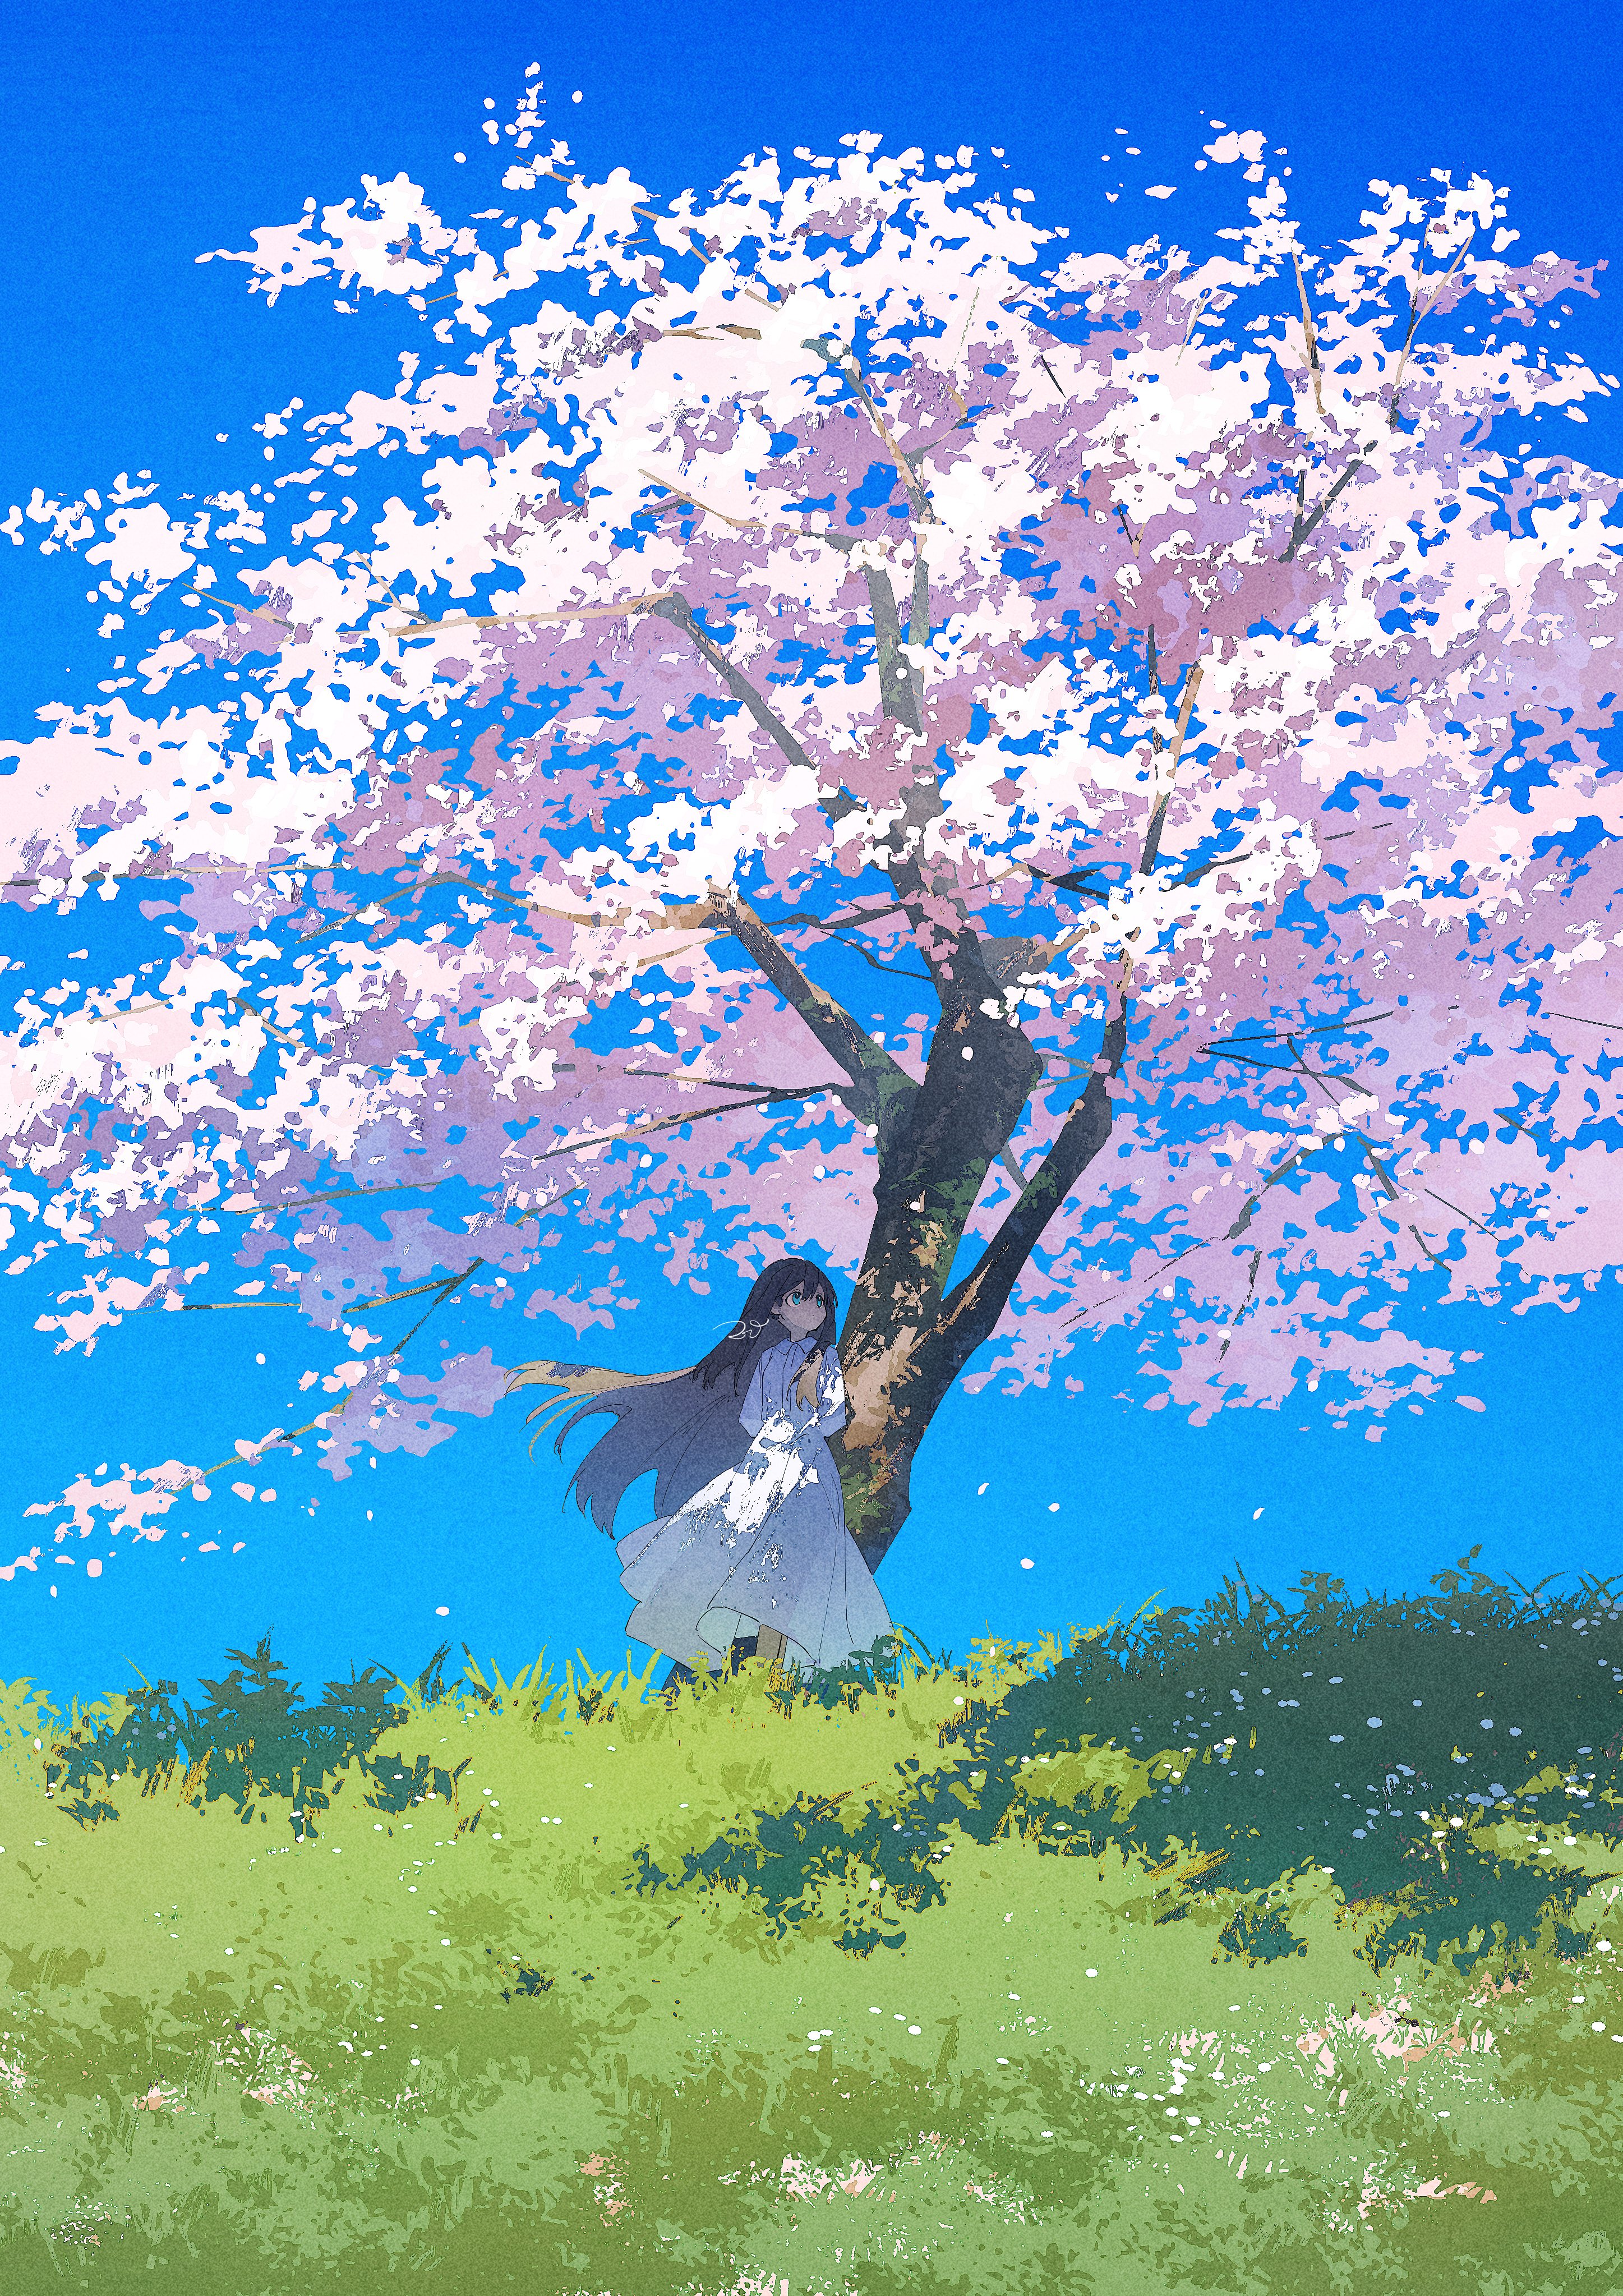 Anime 2894x4093 Potg dress anime anime girls trees clear sky grass